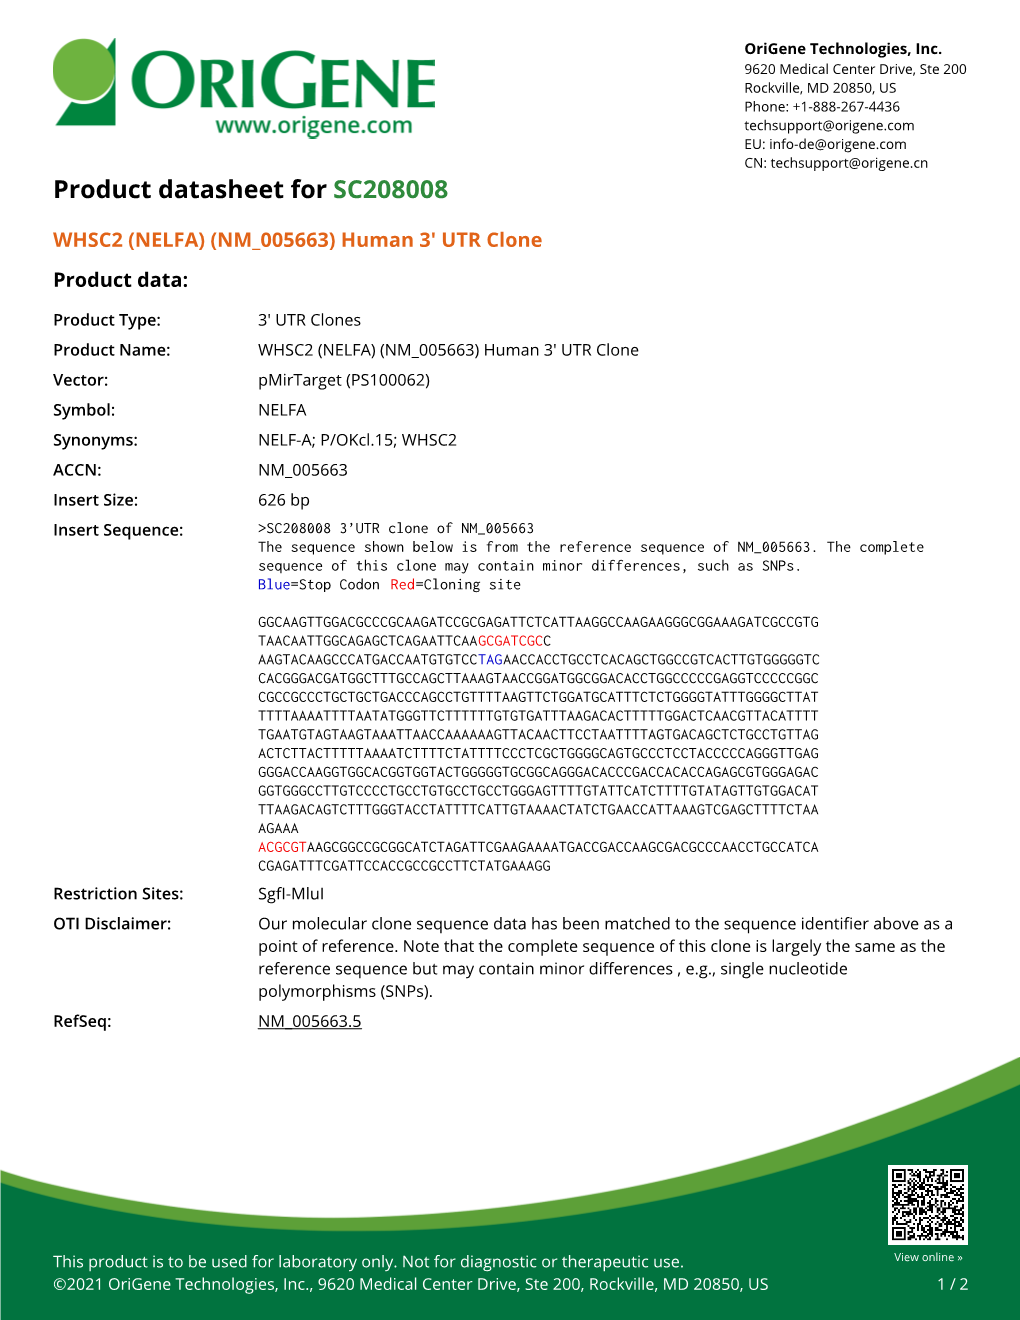 WHSC2 (NELFA) (NM 005663) Human 3' UTR Clone Product Data